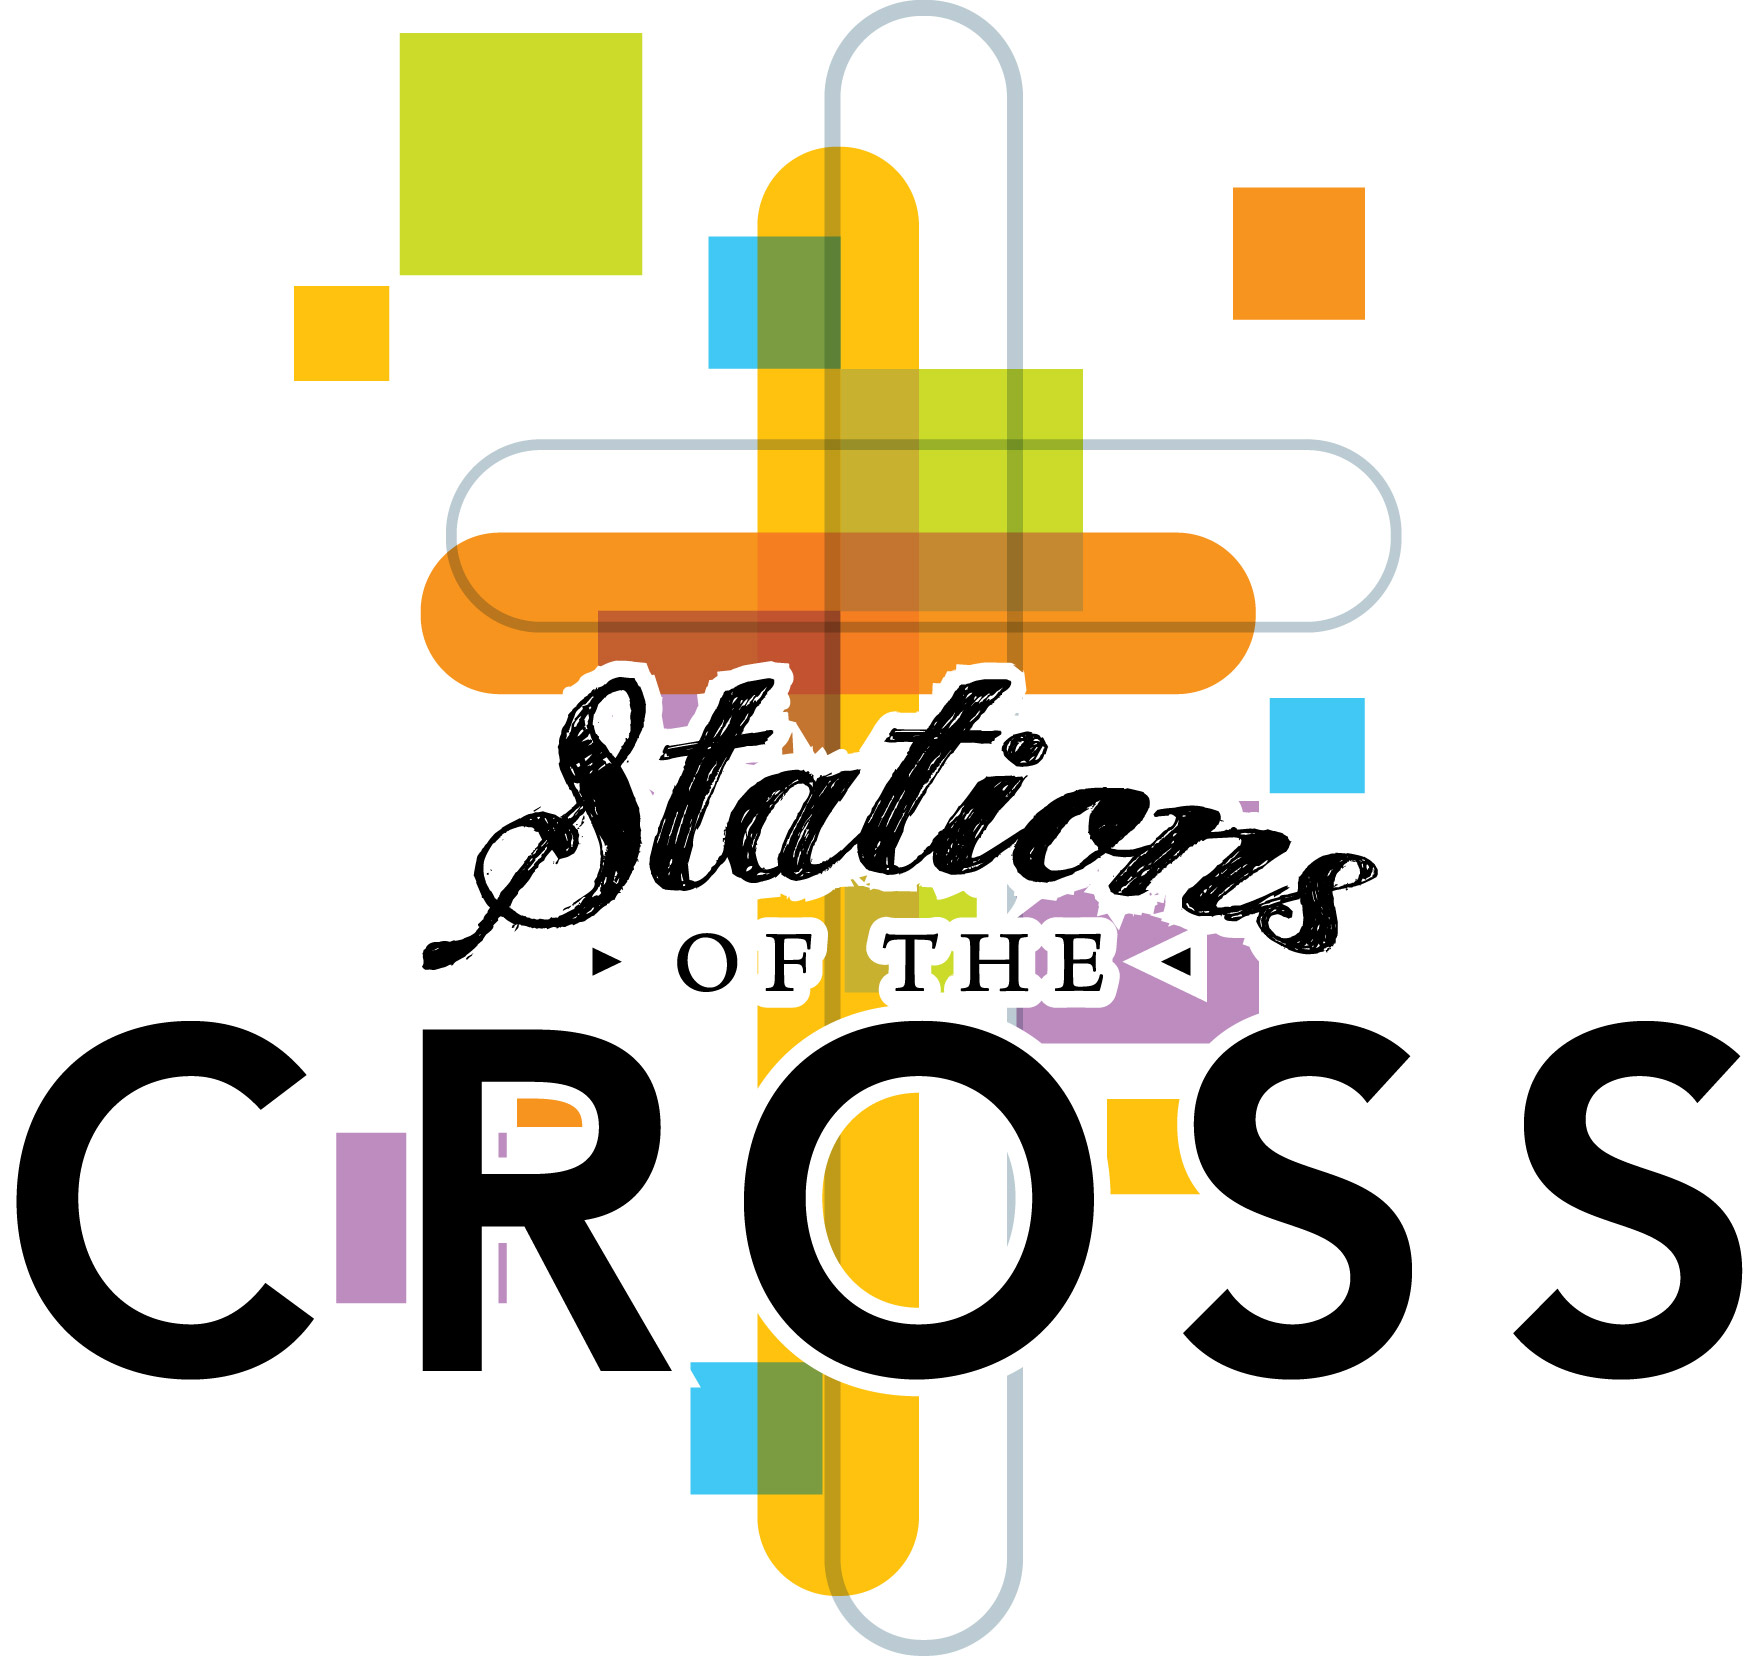 Station of Cross